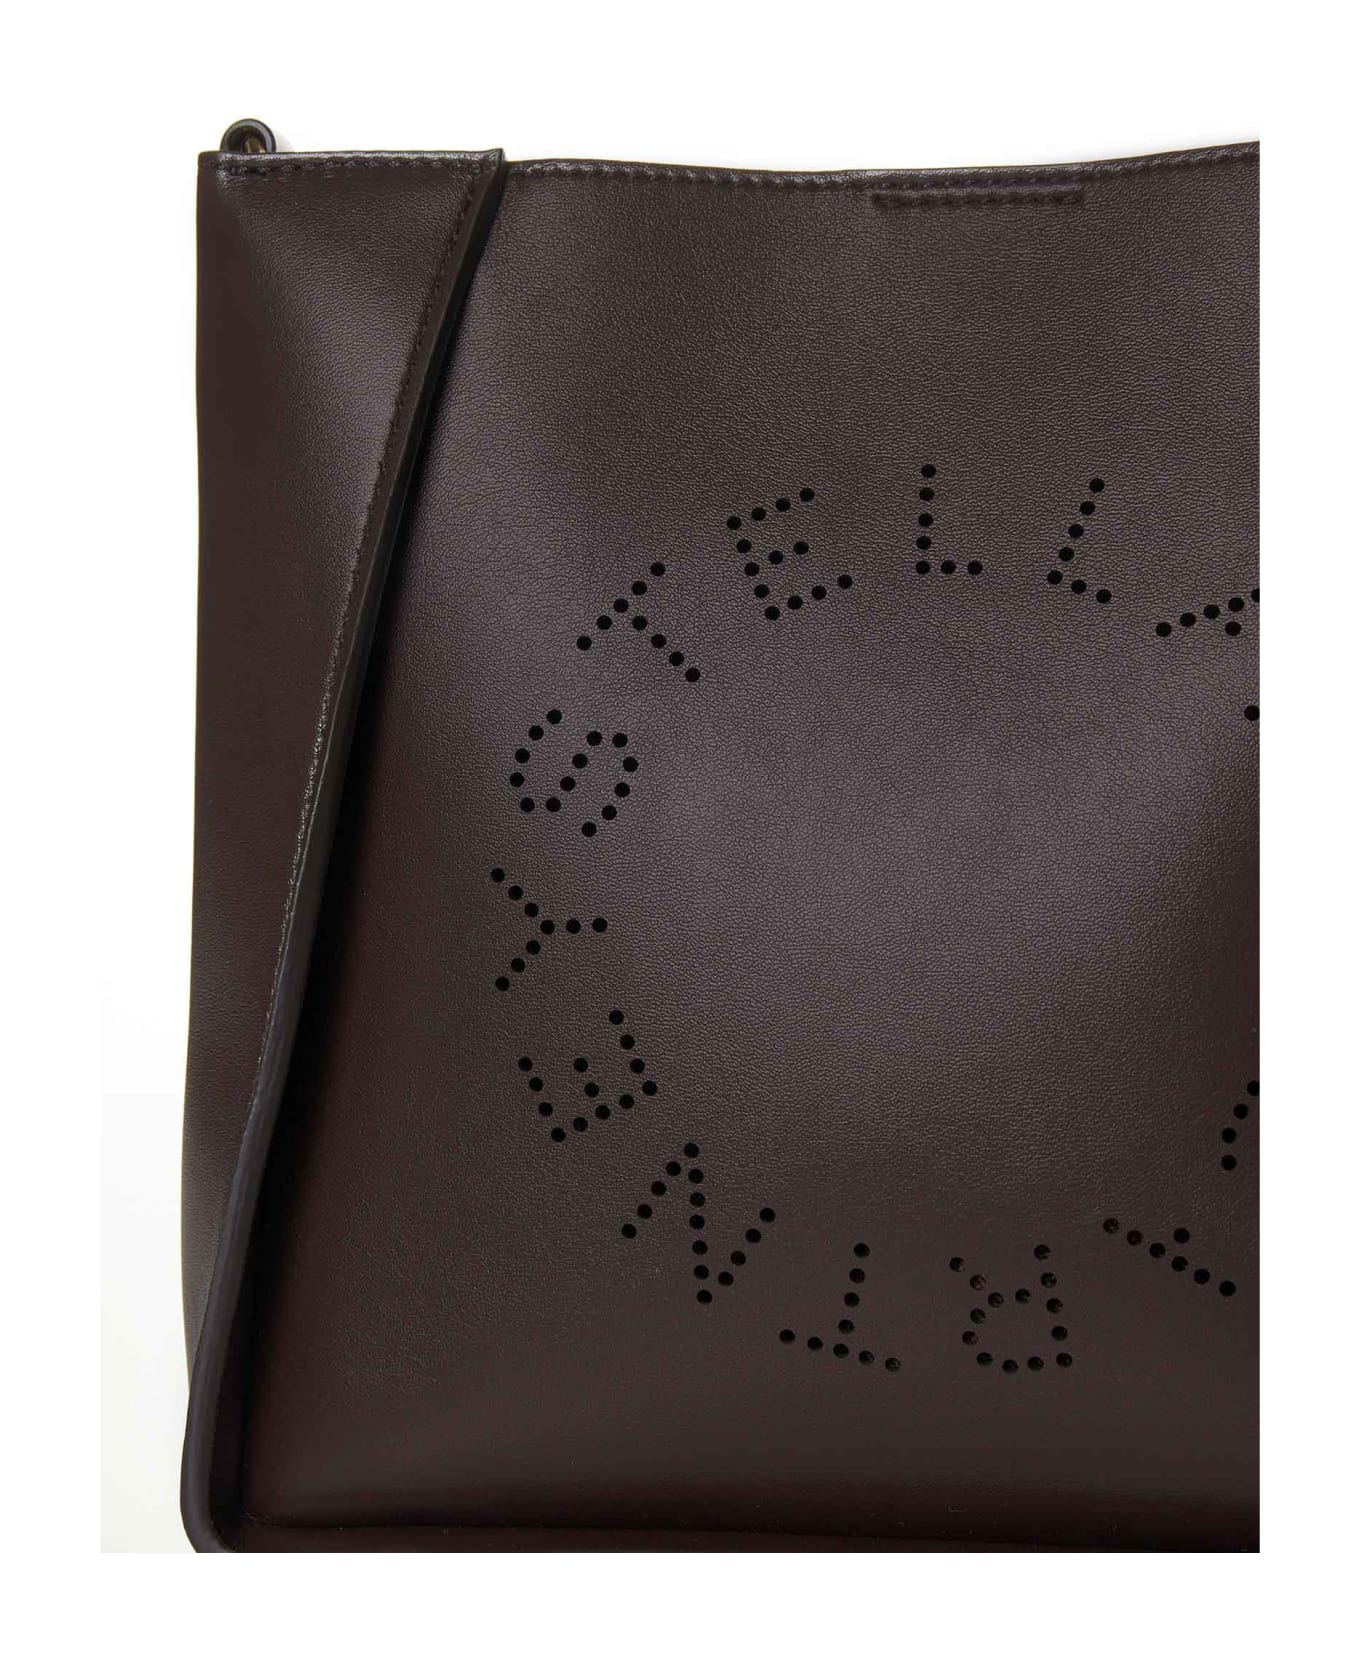 Stella McCartney Crossbody Bag - Chocolate Brown